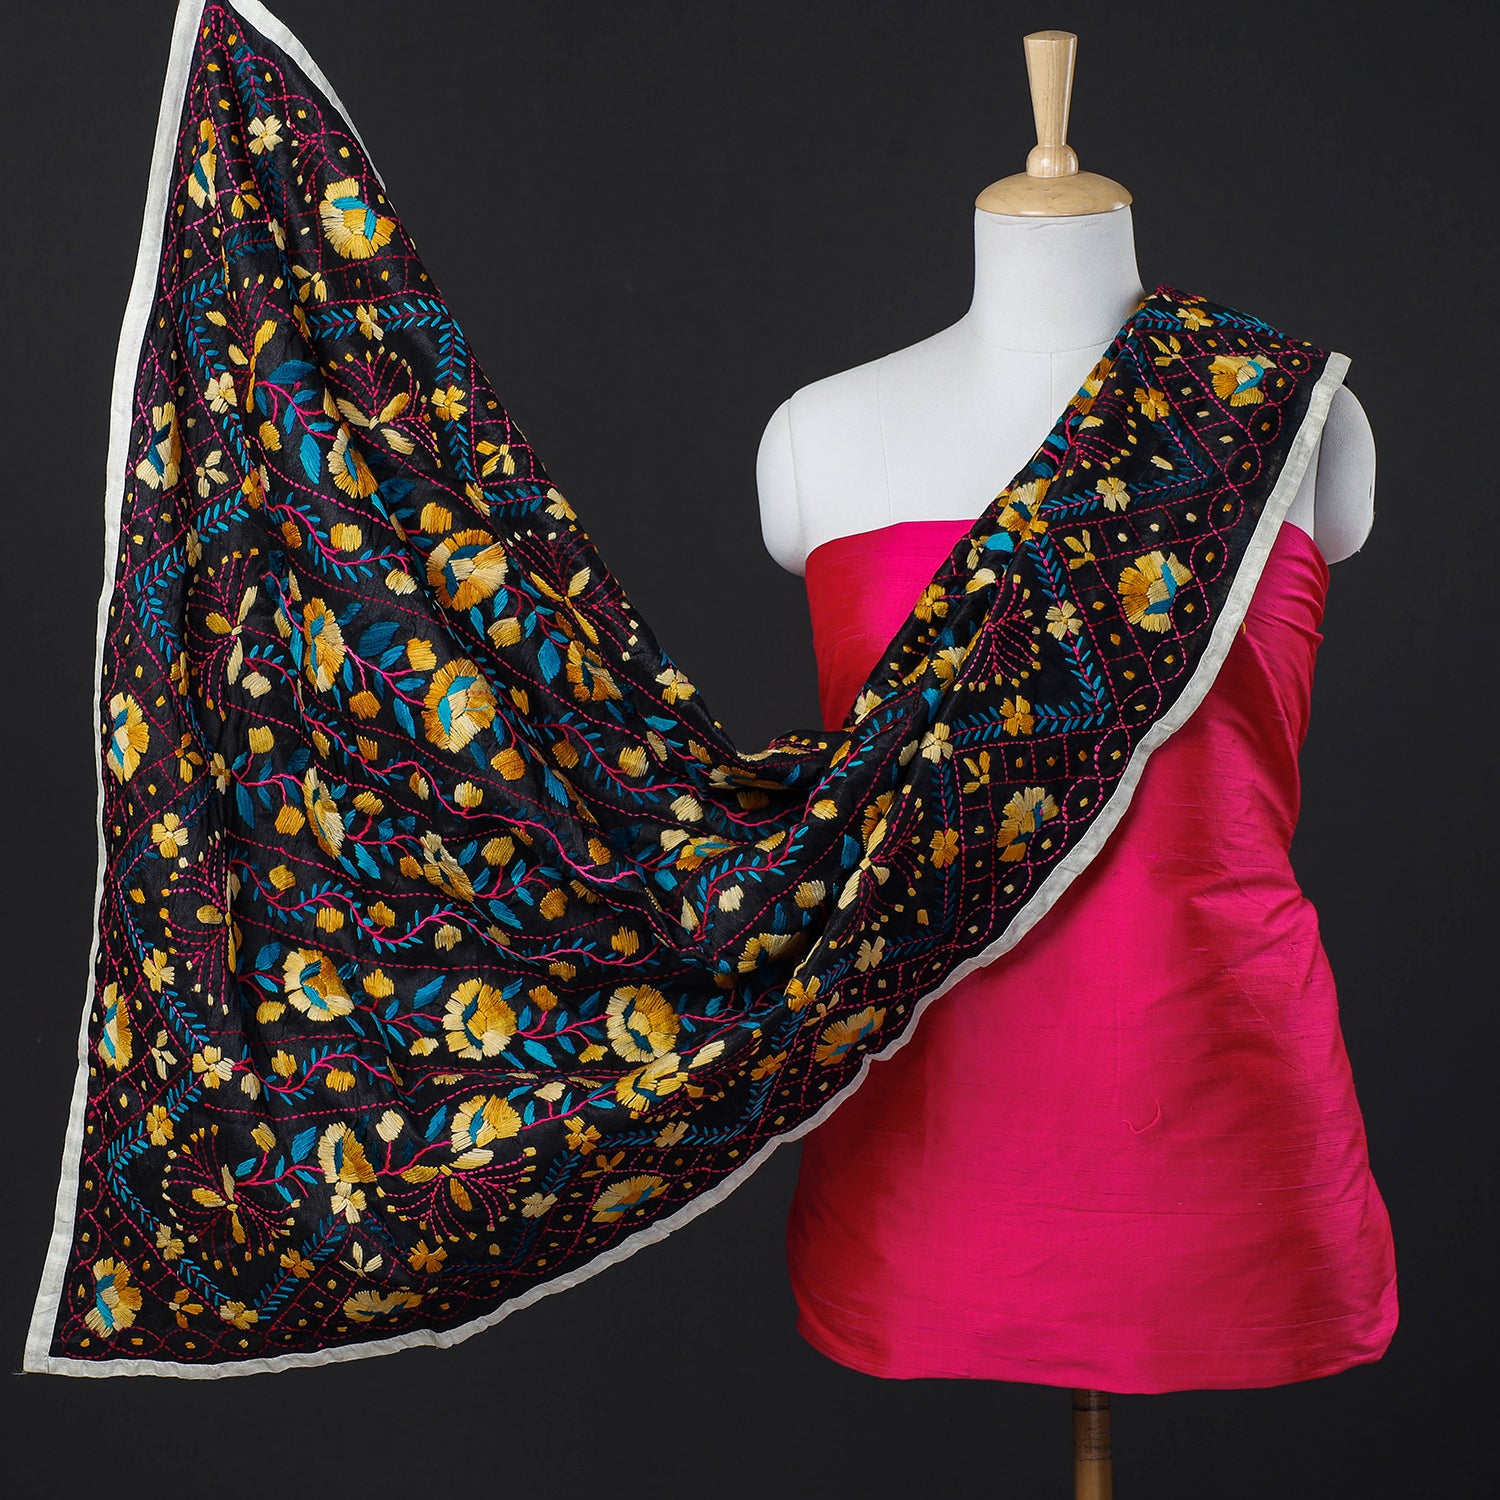 Persian Pink Pure Moonga Silk Handloom Banarasi Suit Fabric – Khinkhwab